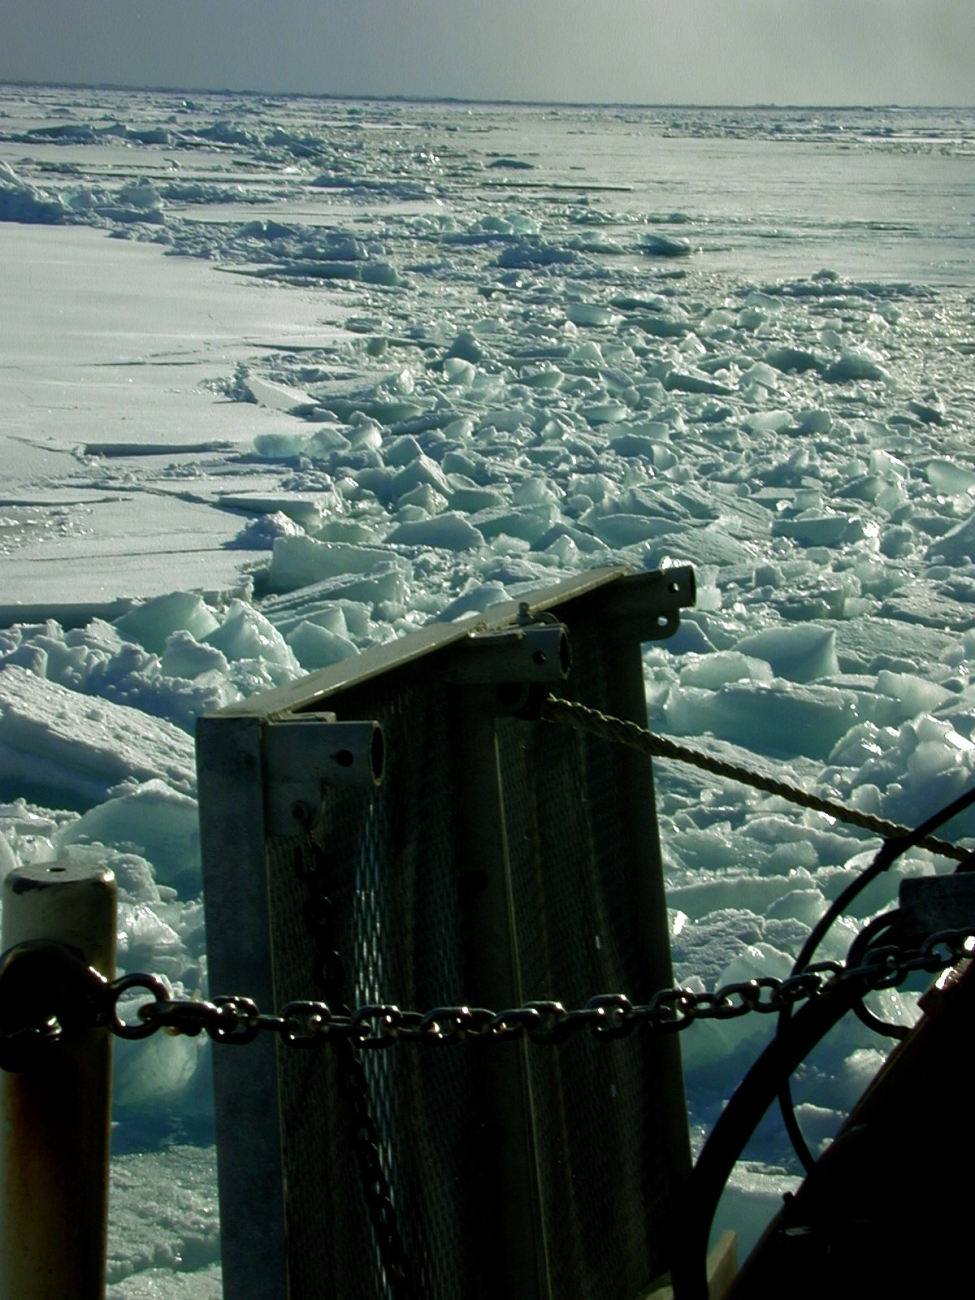 Broken Arctic sea ice in the wake of the US Coast Guard Icebreaker HEALY during scientific studies in the Chukchi Sea